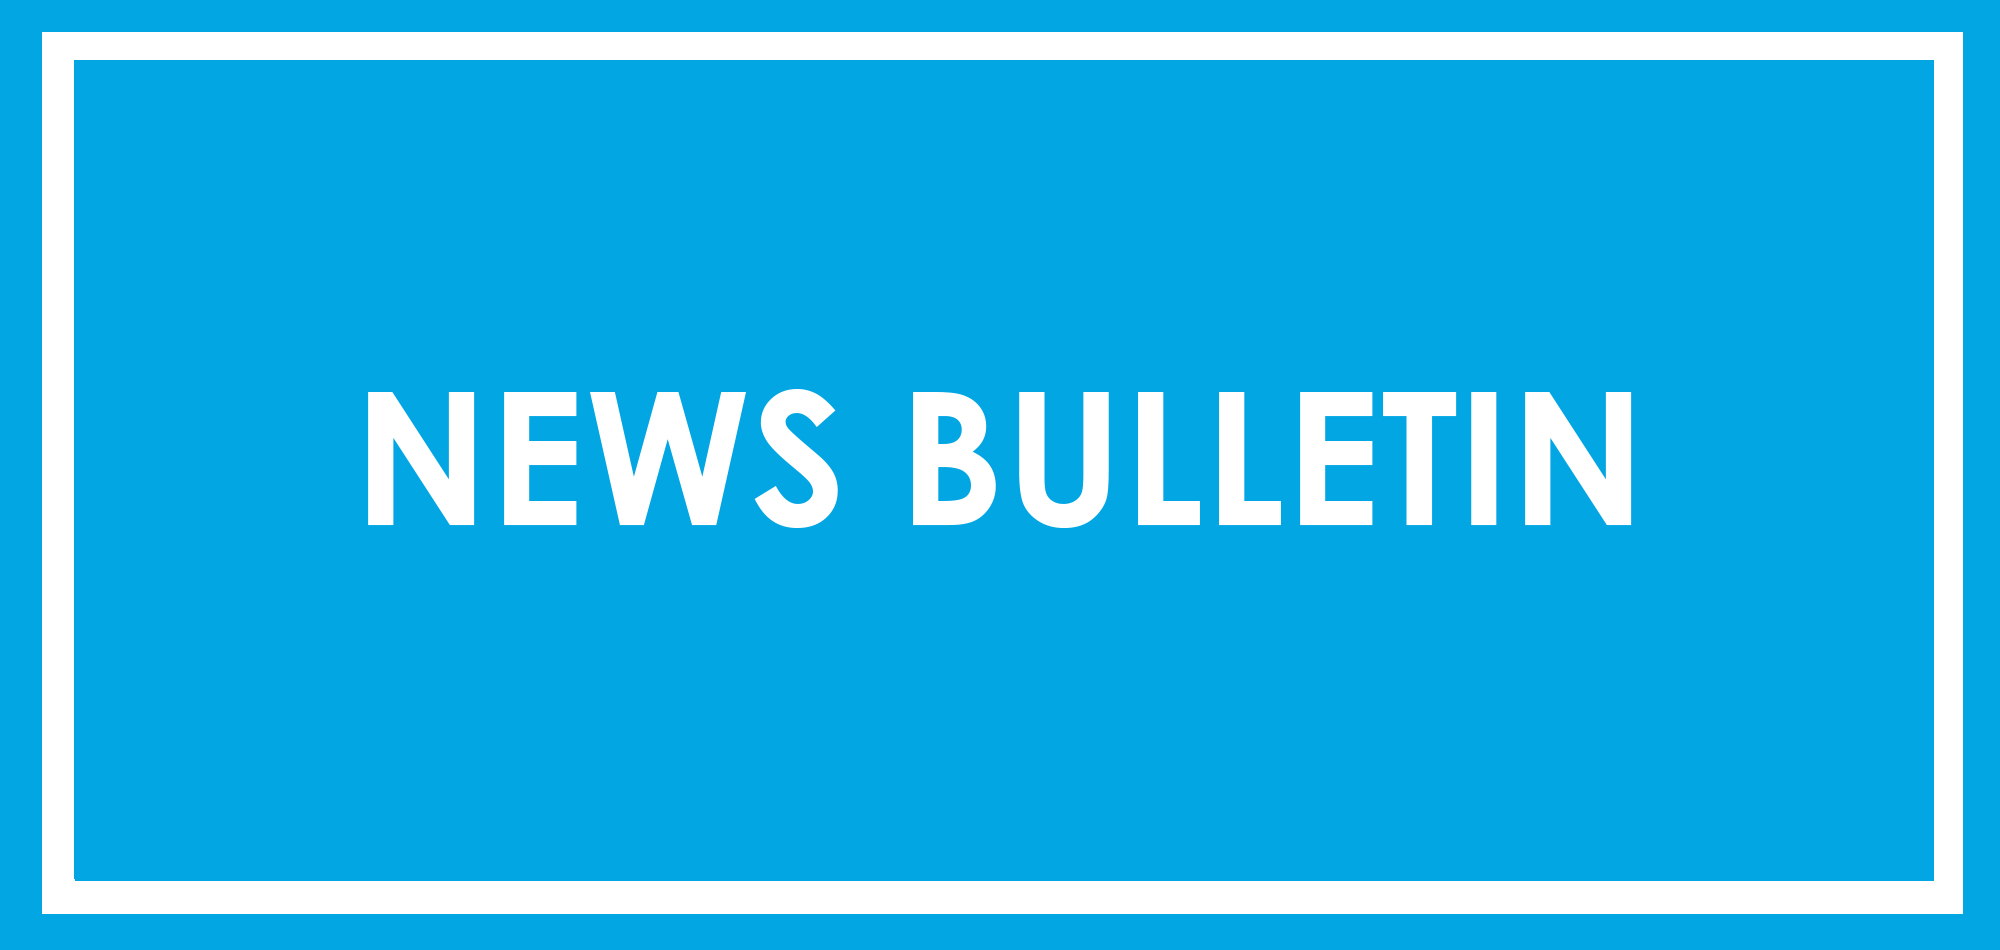 News Bulletin - 14.10.21